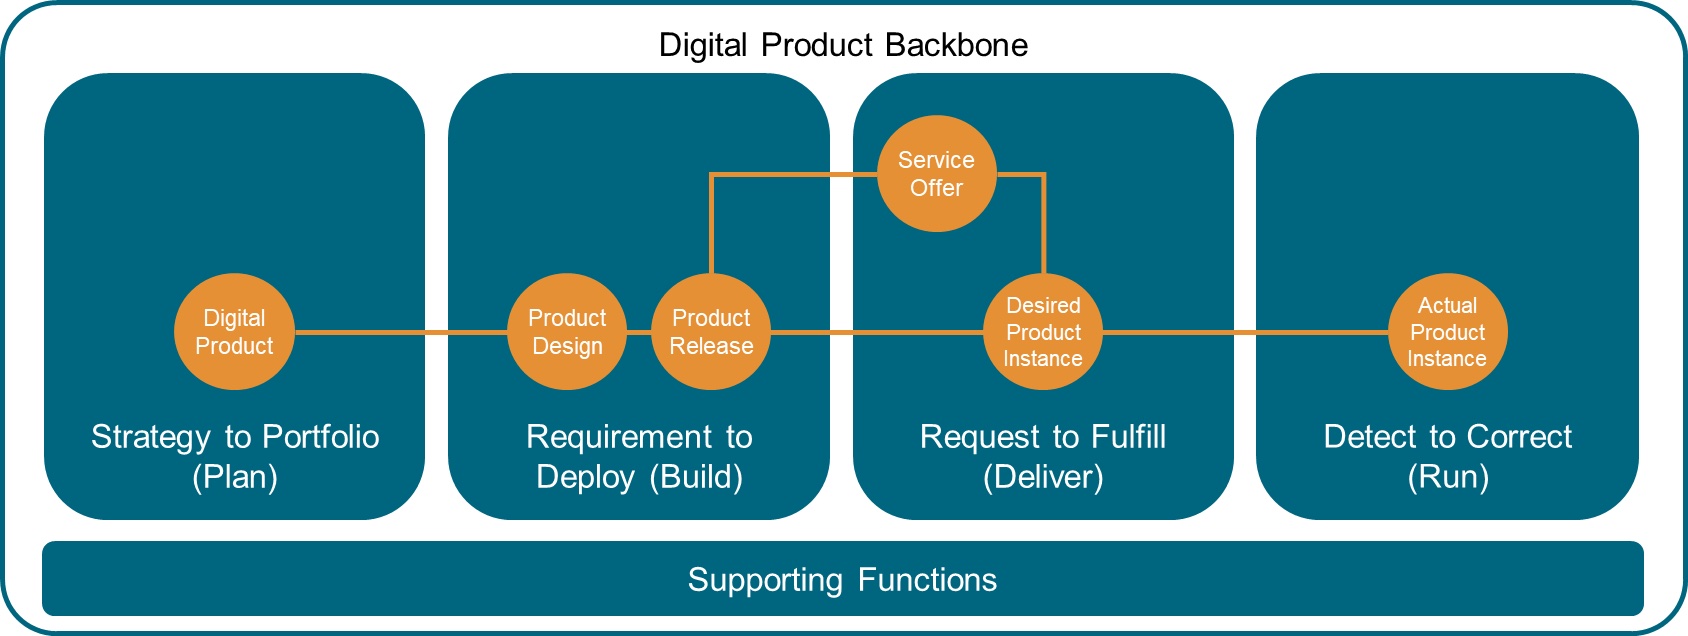 Digital Product Backbone